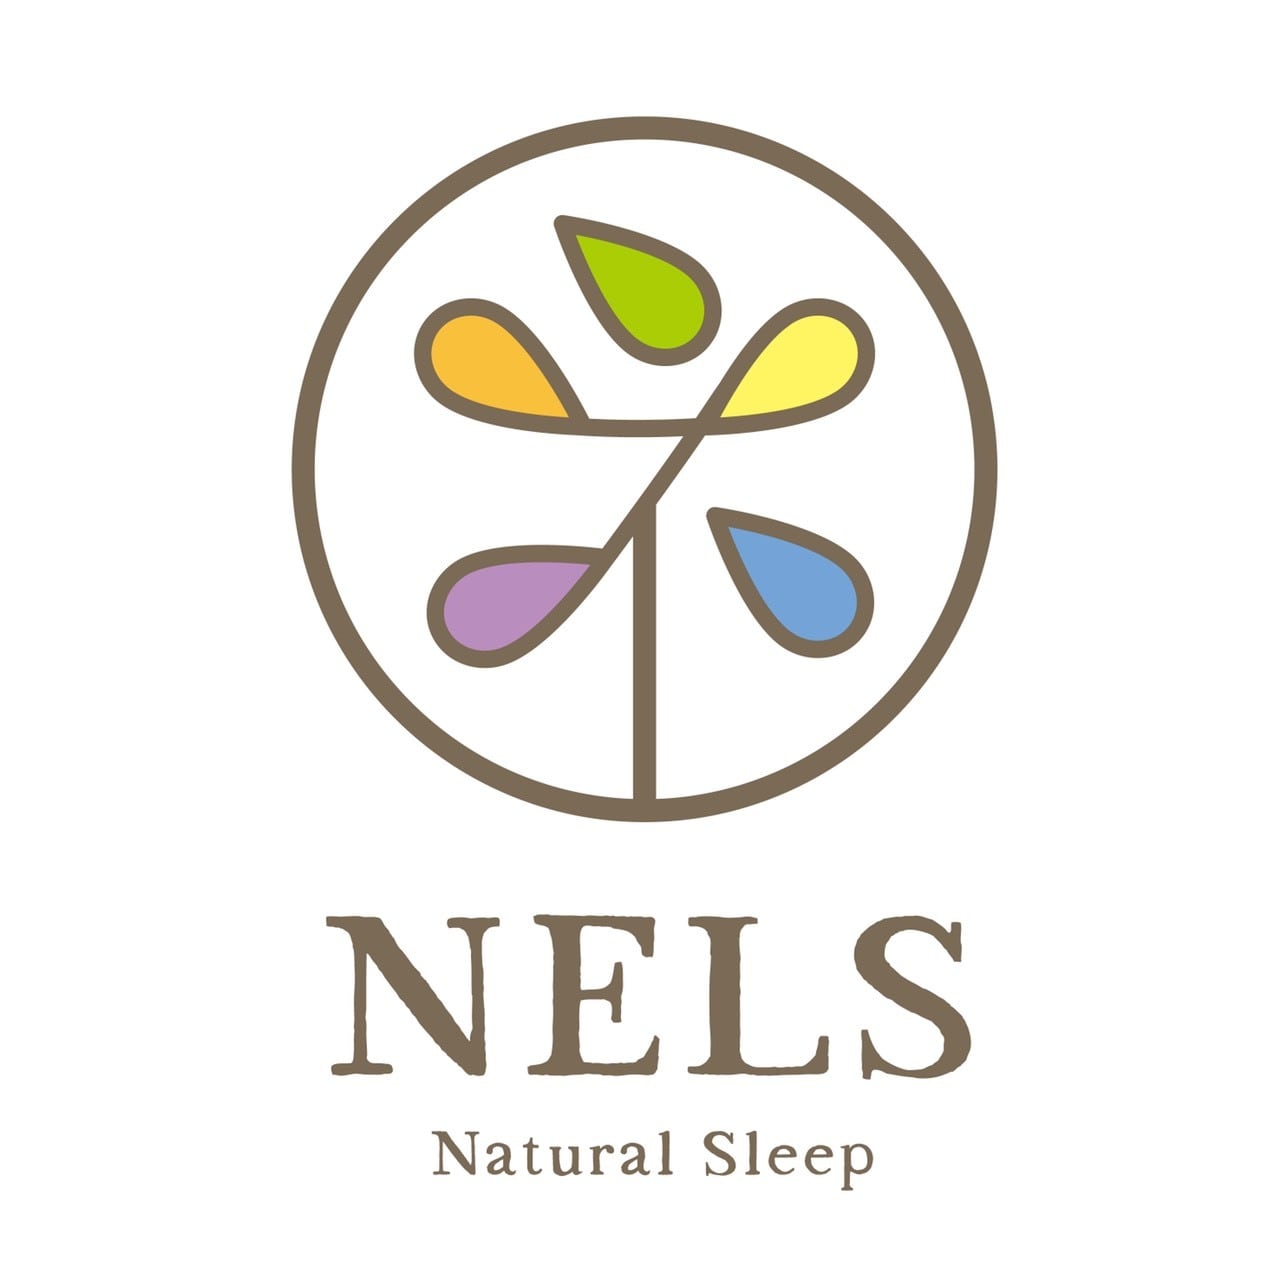 Natural Sleep NELS